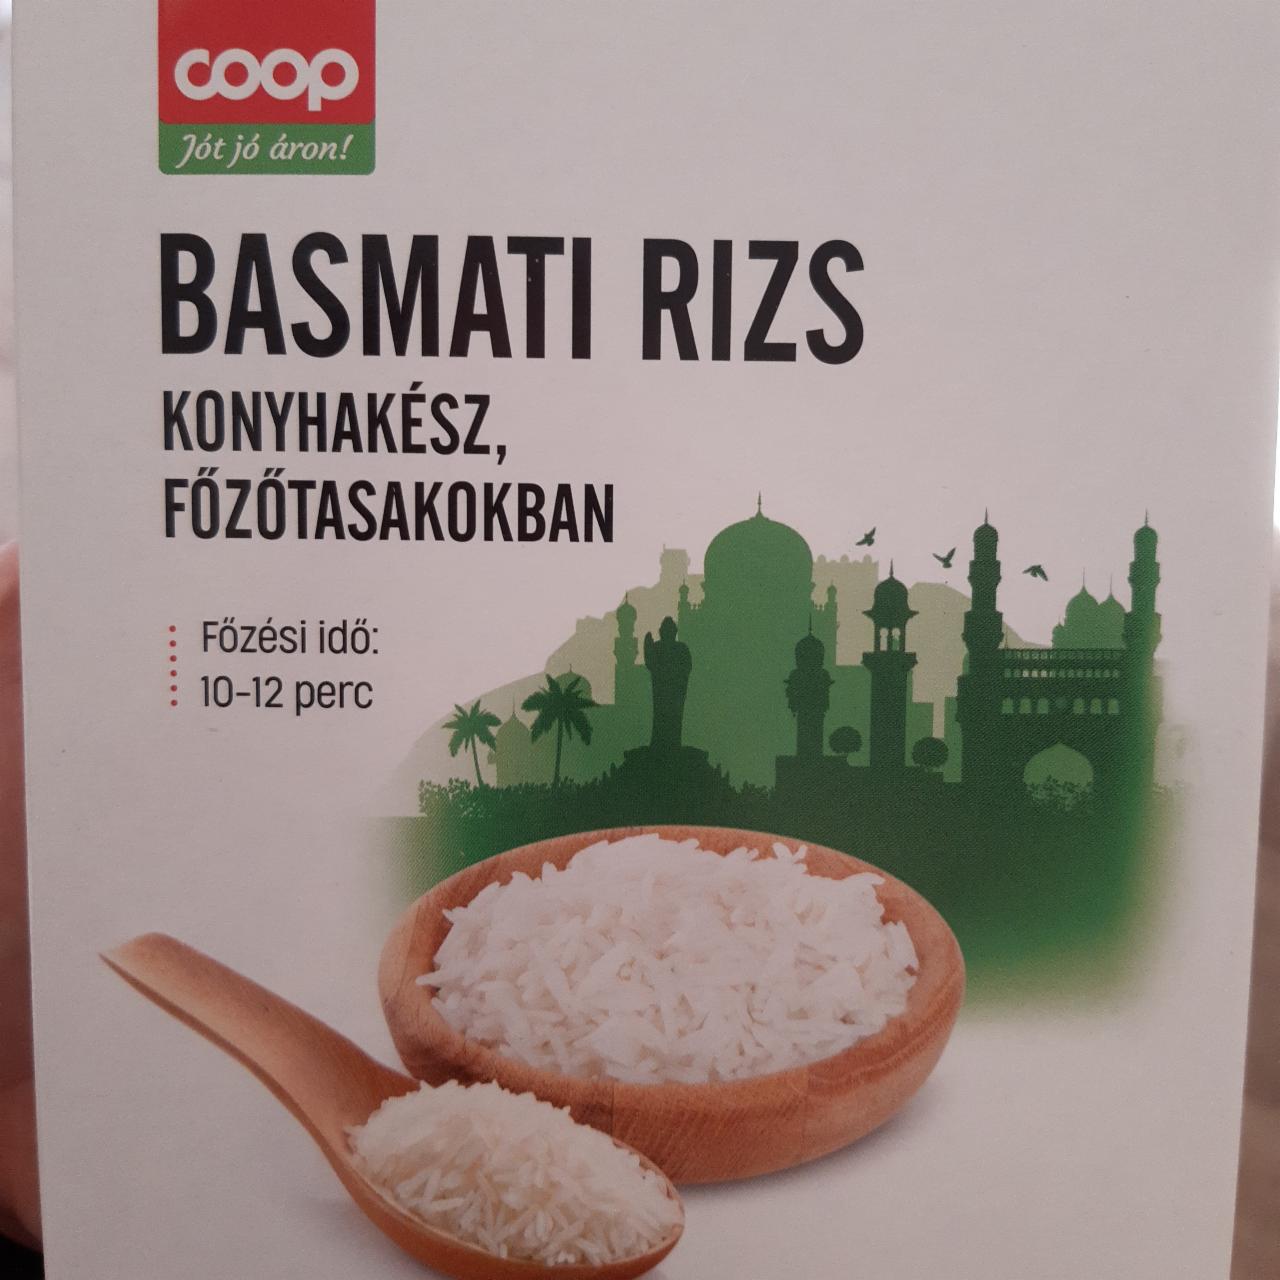 Képek - Basmati rizs főzőtasakos Coop